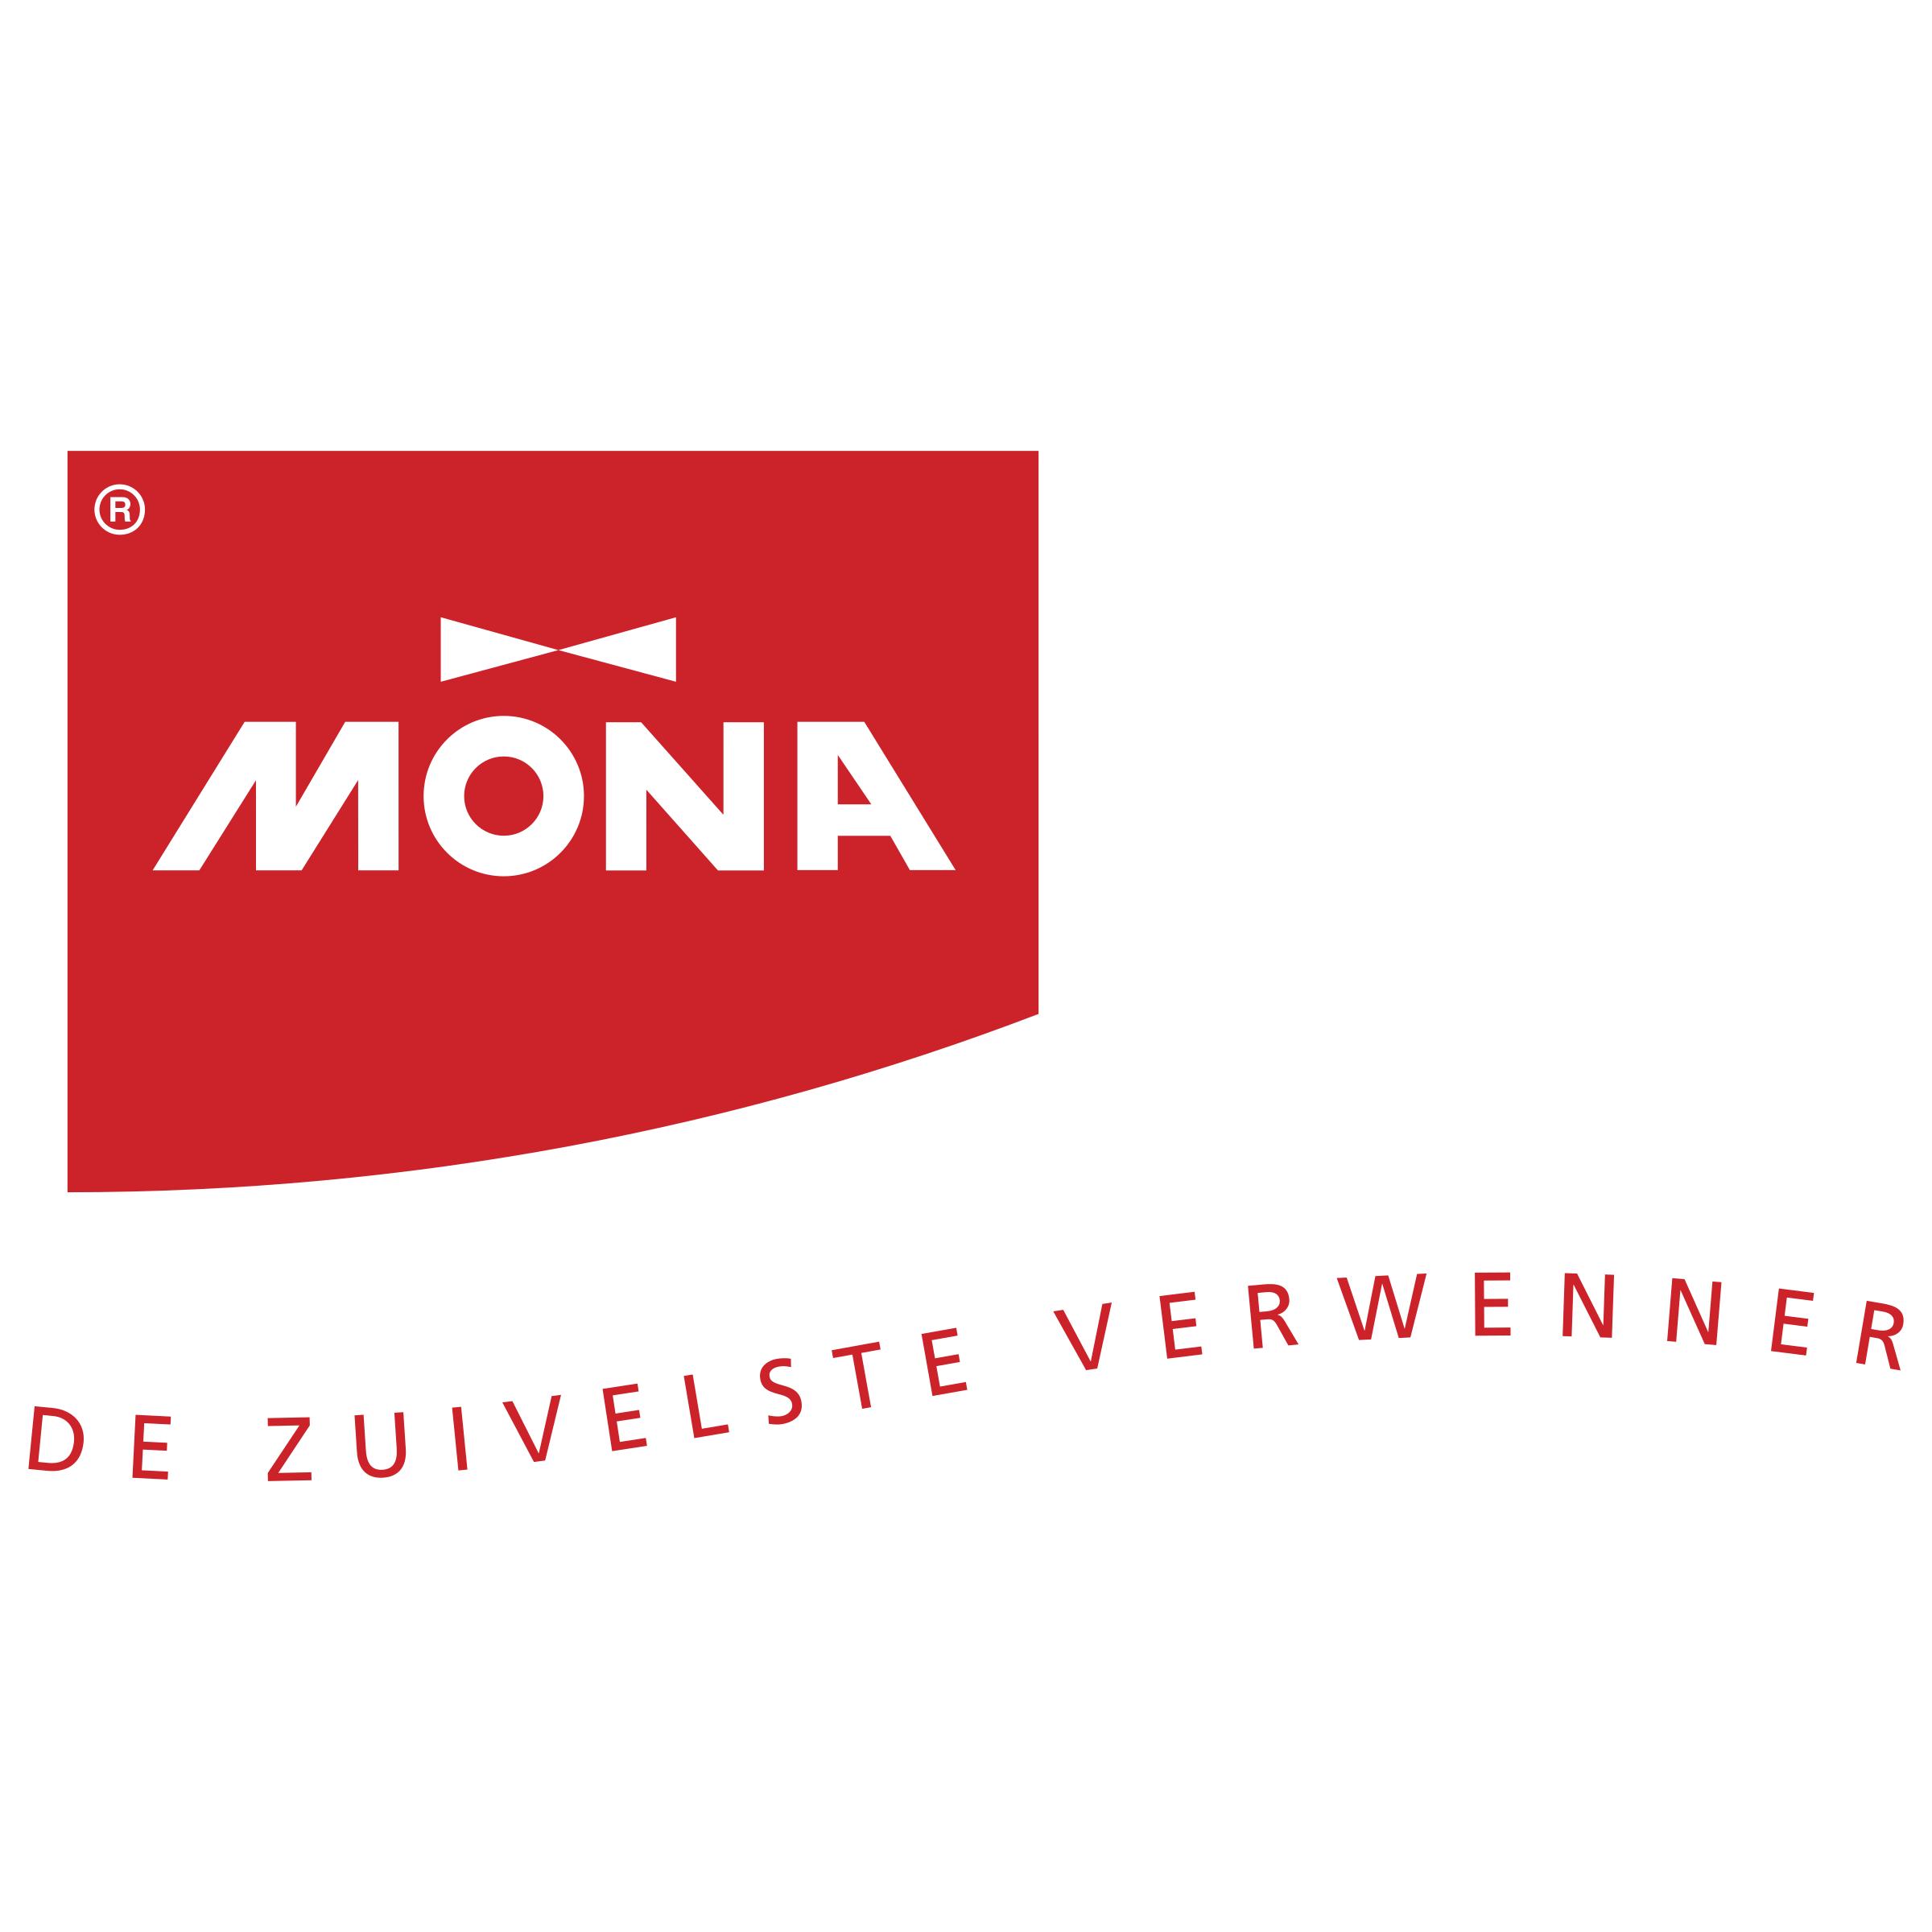 Mona Logo - Mona Logo PNG Transparent & SVG Vector